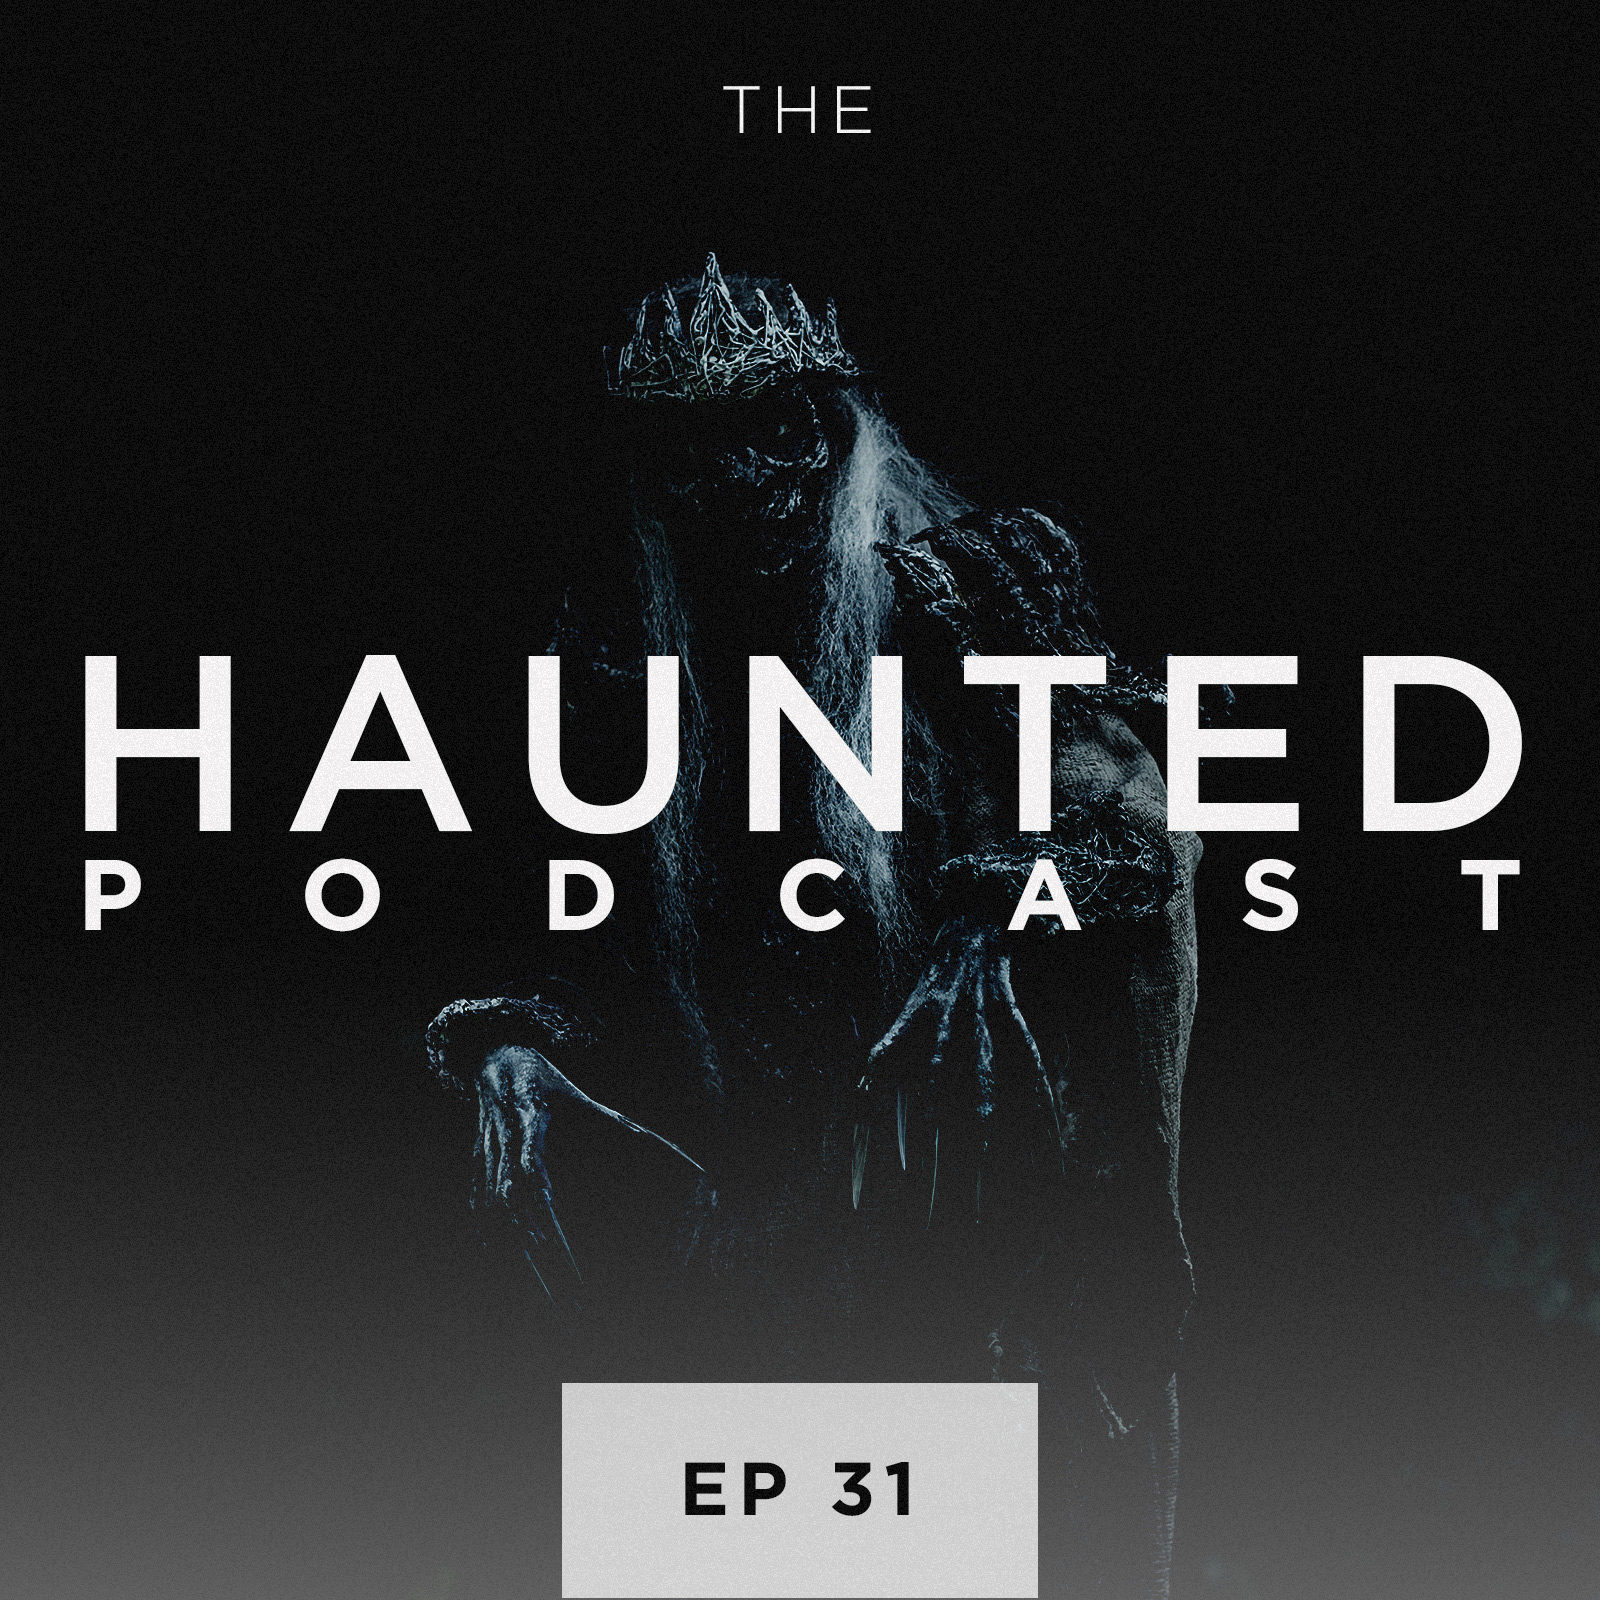 The Haunted Podcast - Episode 31: Haunted Edinburgh